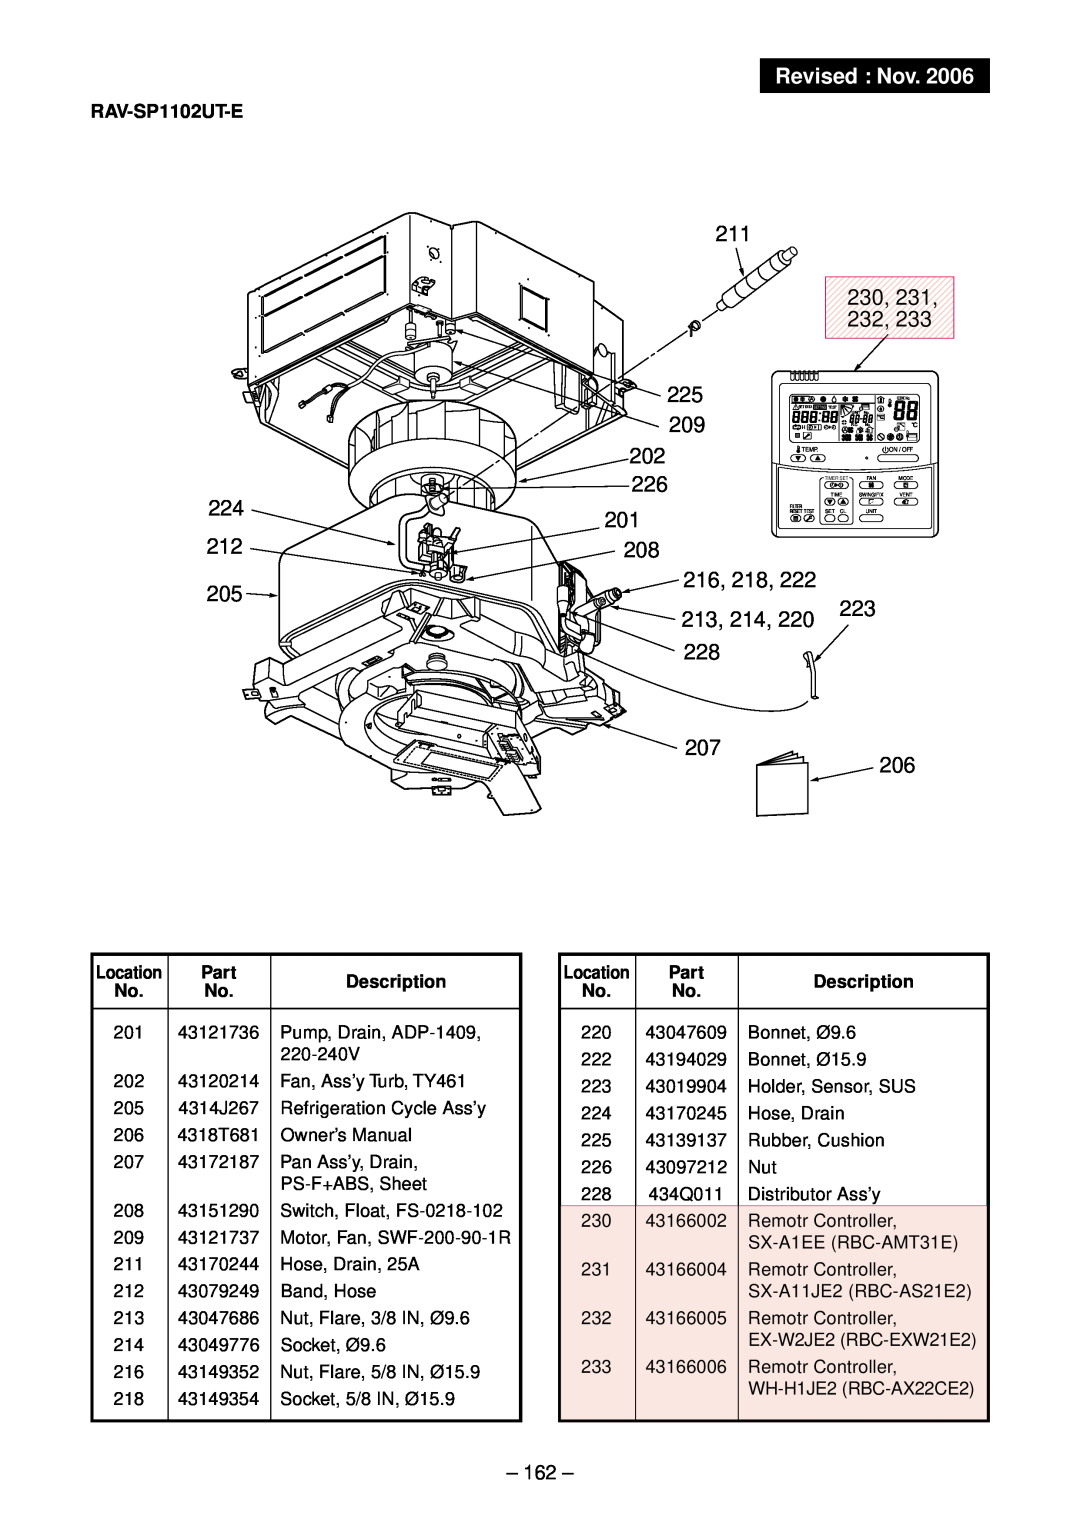 Toshiba RAV-SM802UT-E, RAV-SM1102UT-E, RAV-SM1402UT-E, RAV-SM562UT-E service manual Revised : Nov, 230 